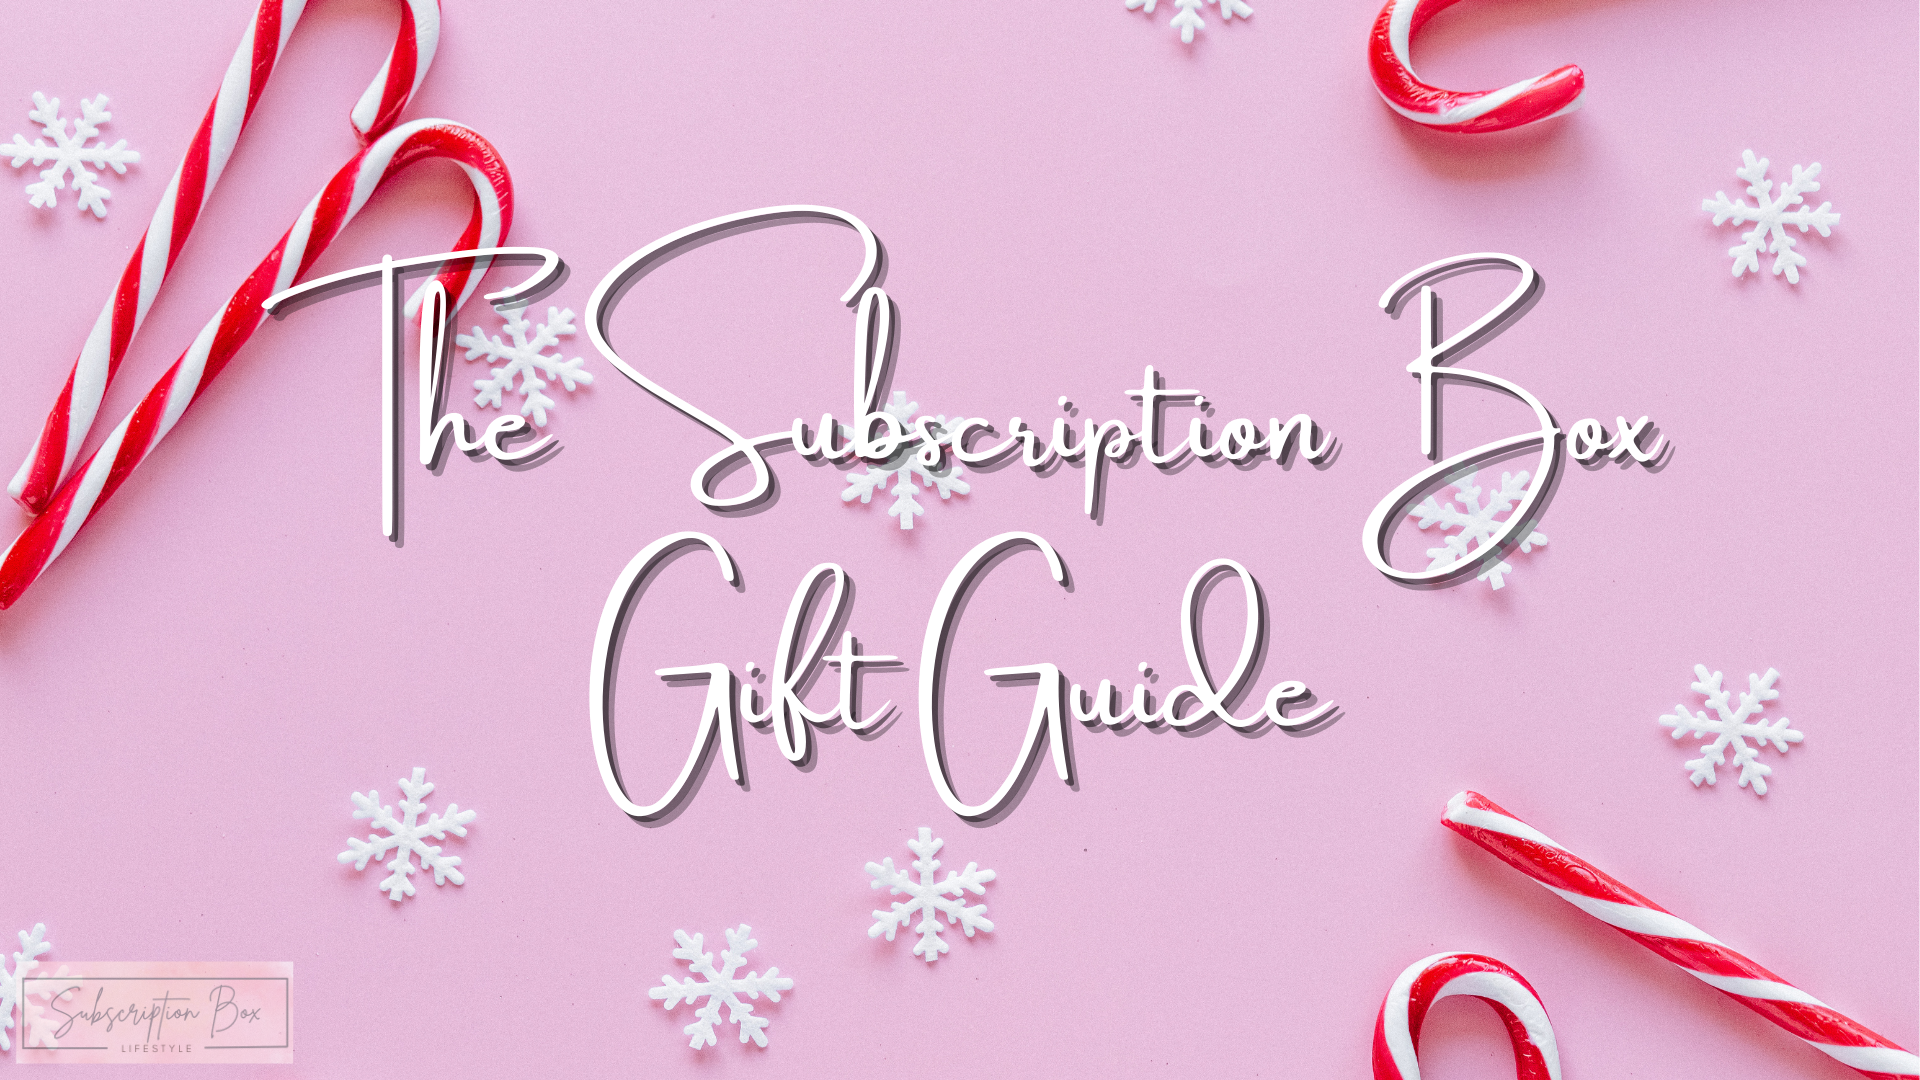 Smartass & Sass - Hilarious Holiday Gift Labels #1 